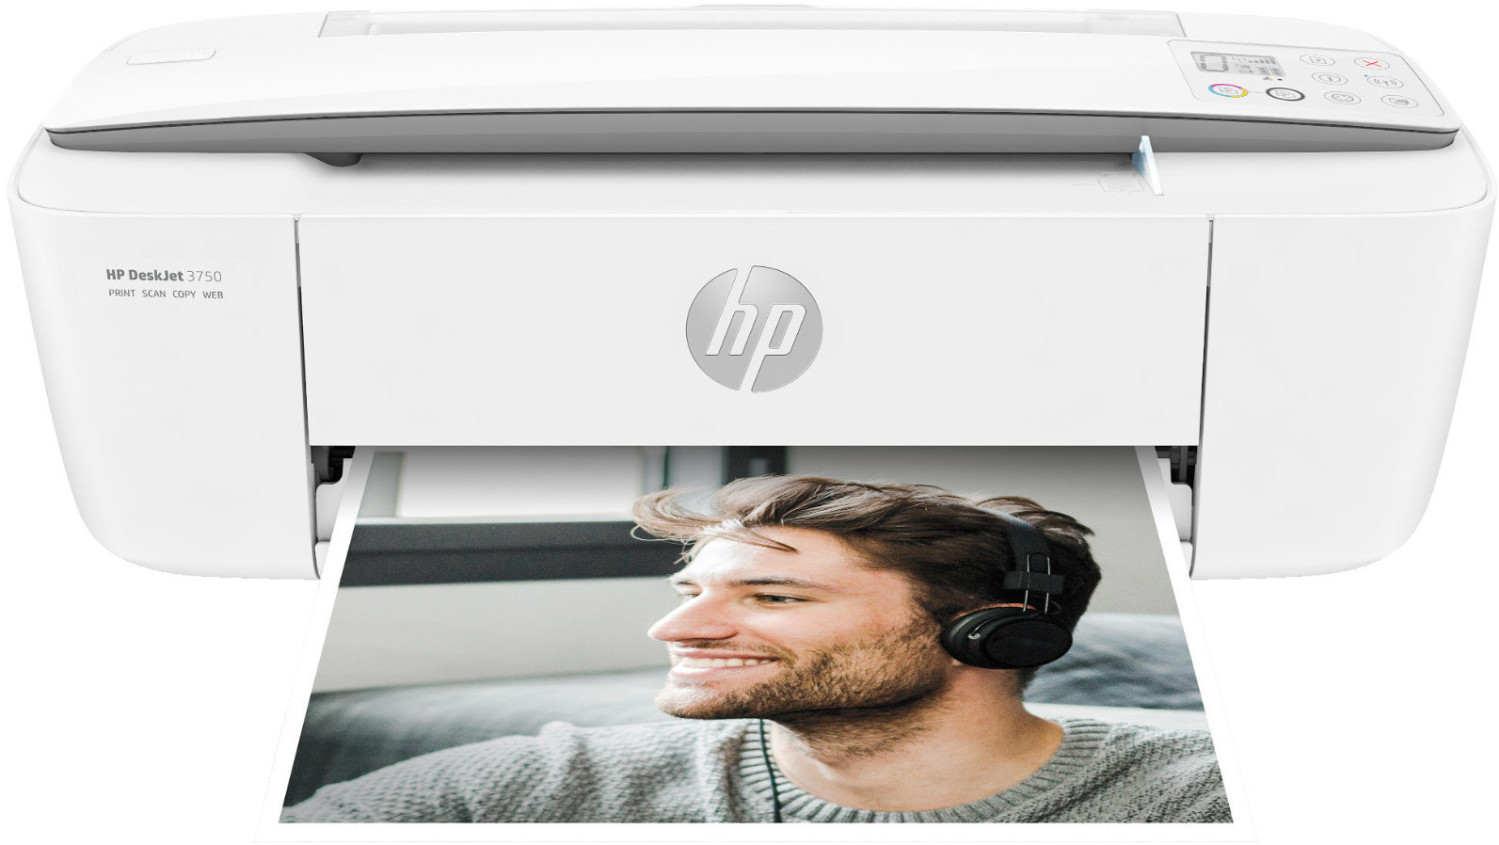 HP Deskjet 2620 All-in-One - imprimante multifonctions jet d'encre couleur  A4 - Wifi, USB Pas Cher